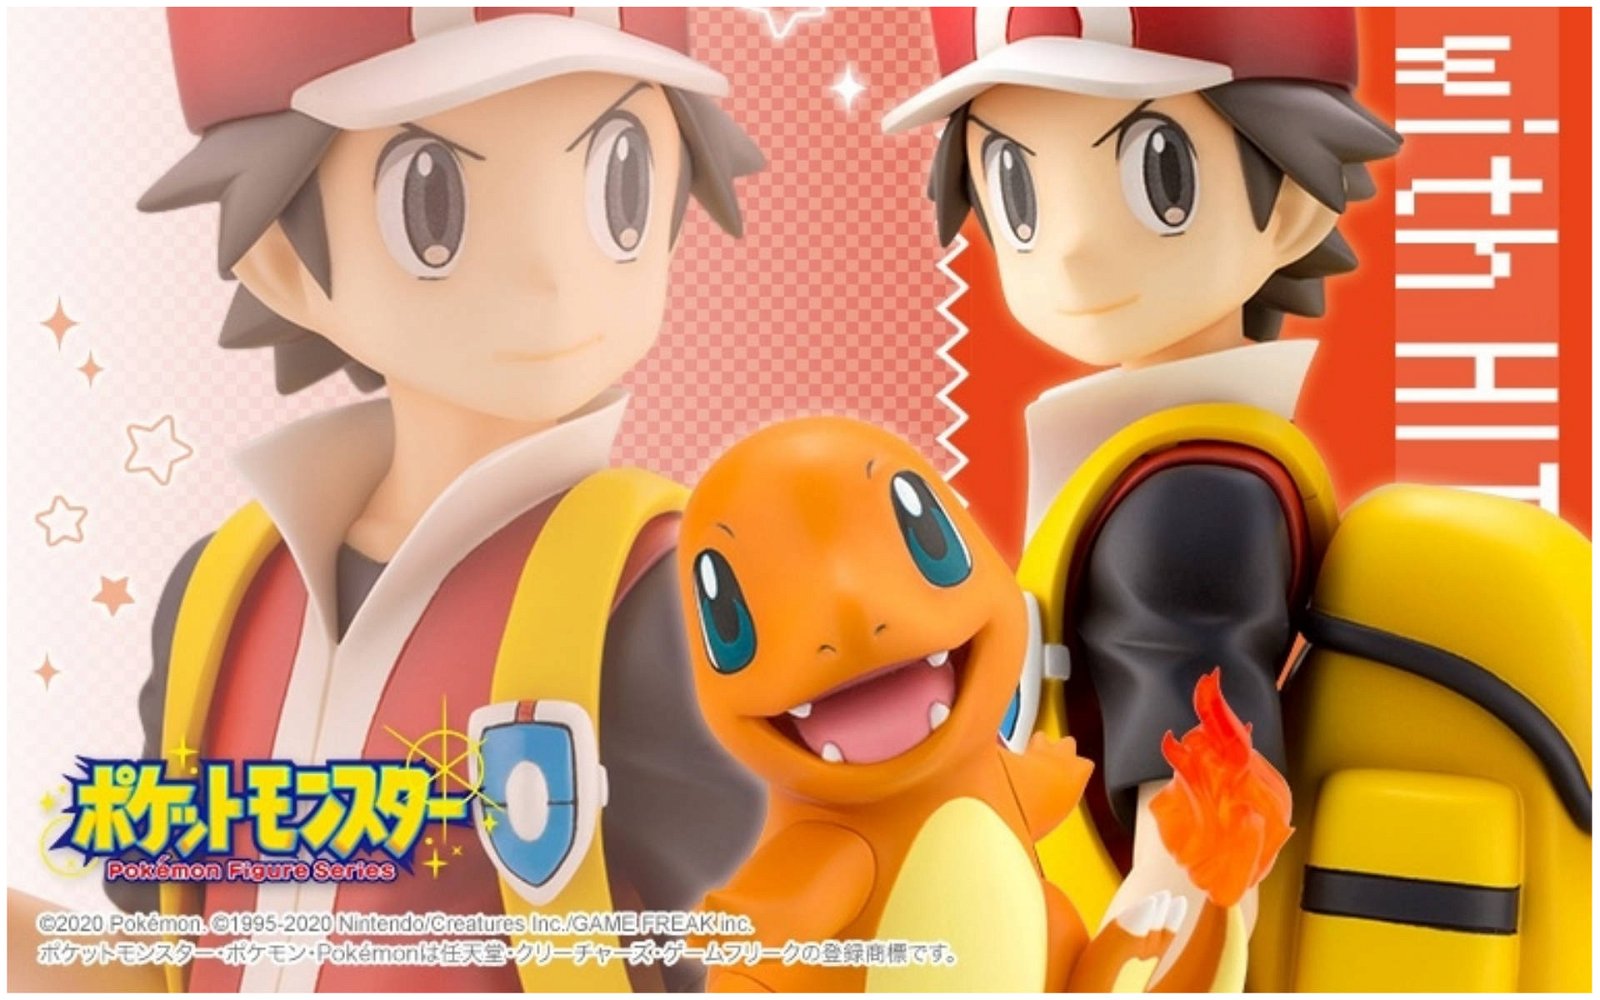 Immagine di Pokémon, da Kotobukiya arriva la figure di Red e Charmander